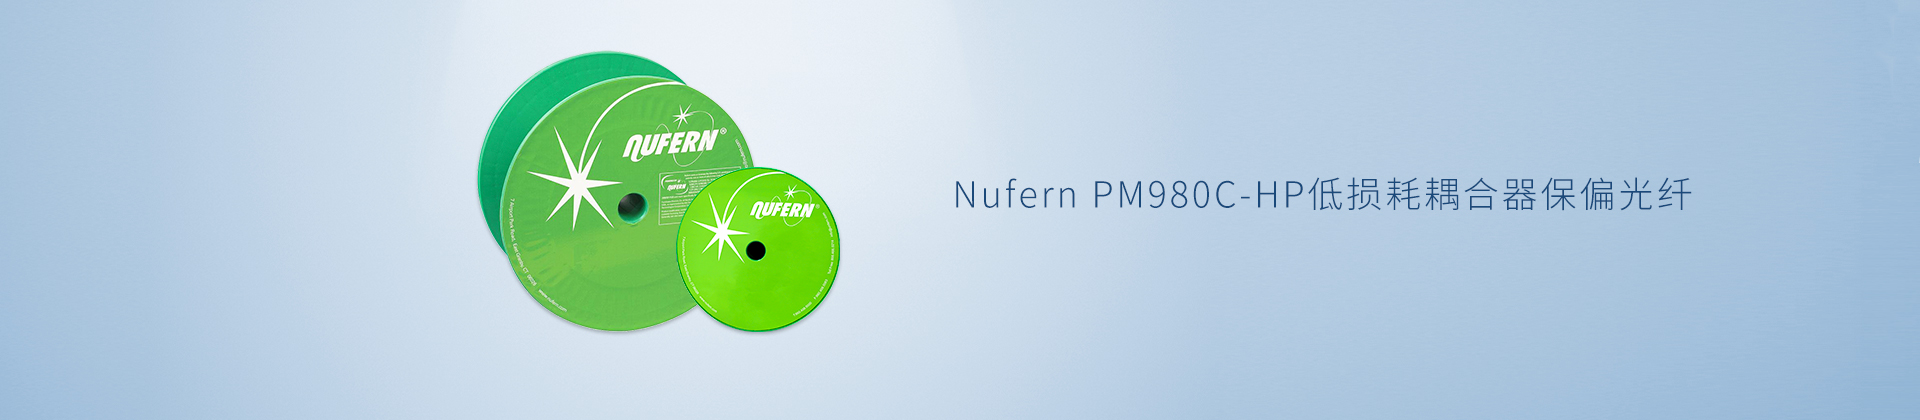 Nufern PM980C-HP低损耗耦合器保偏光纤